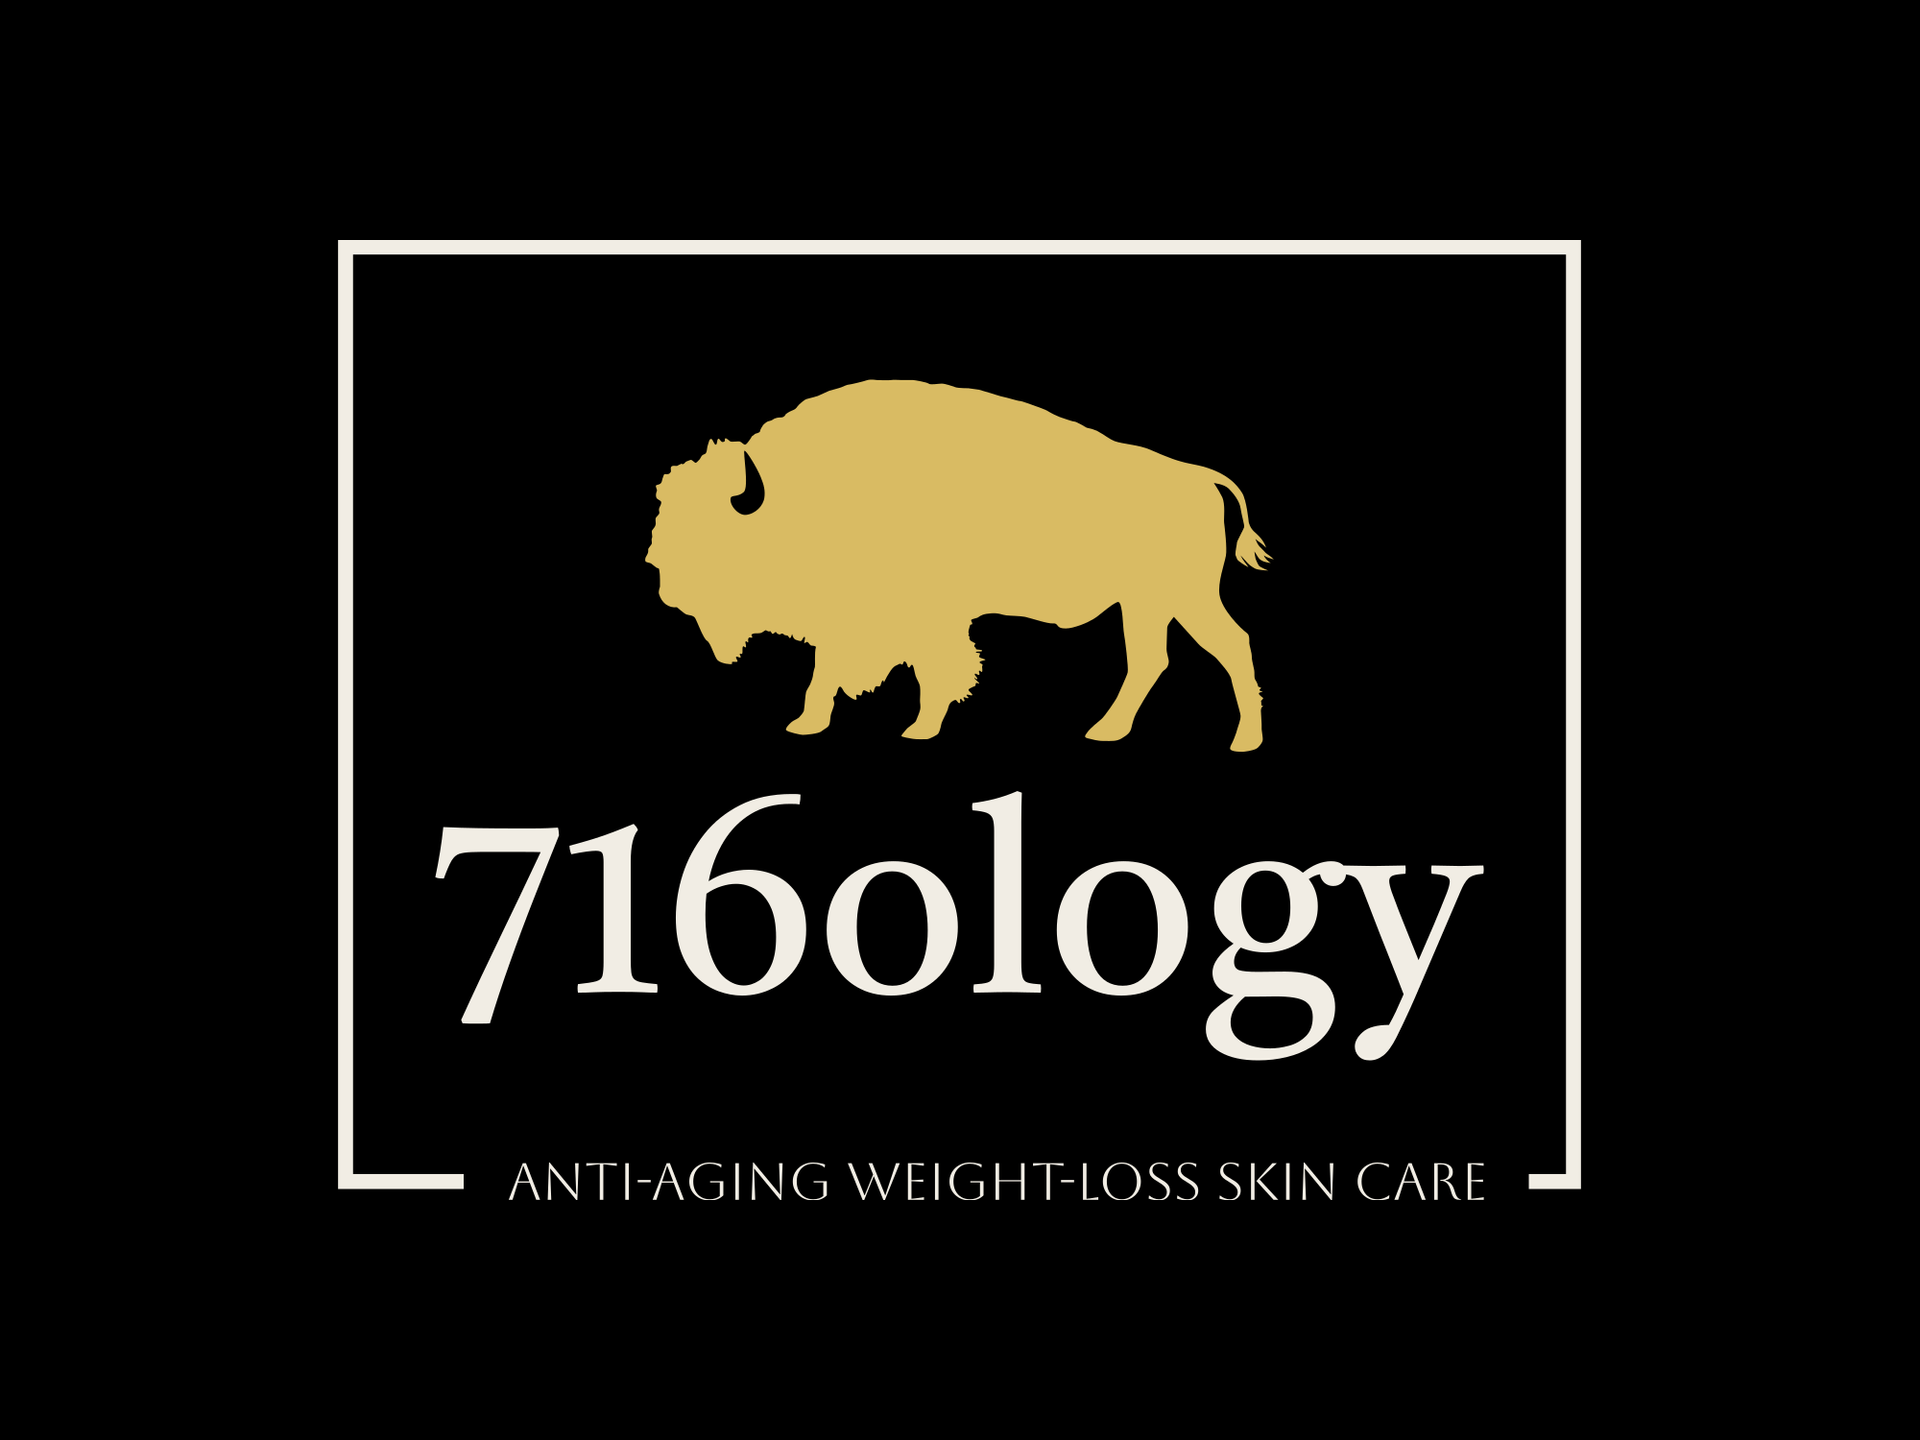 716Ology logo